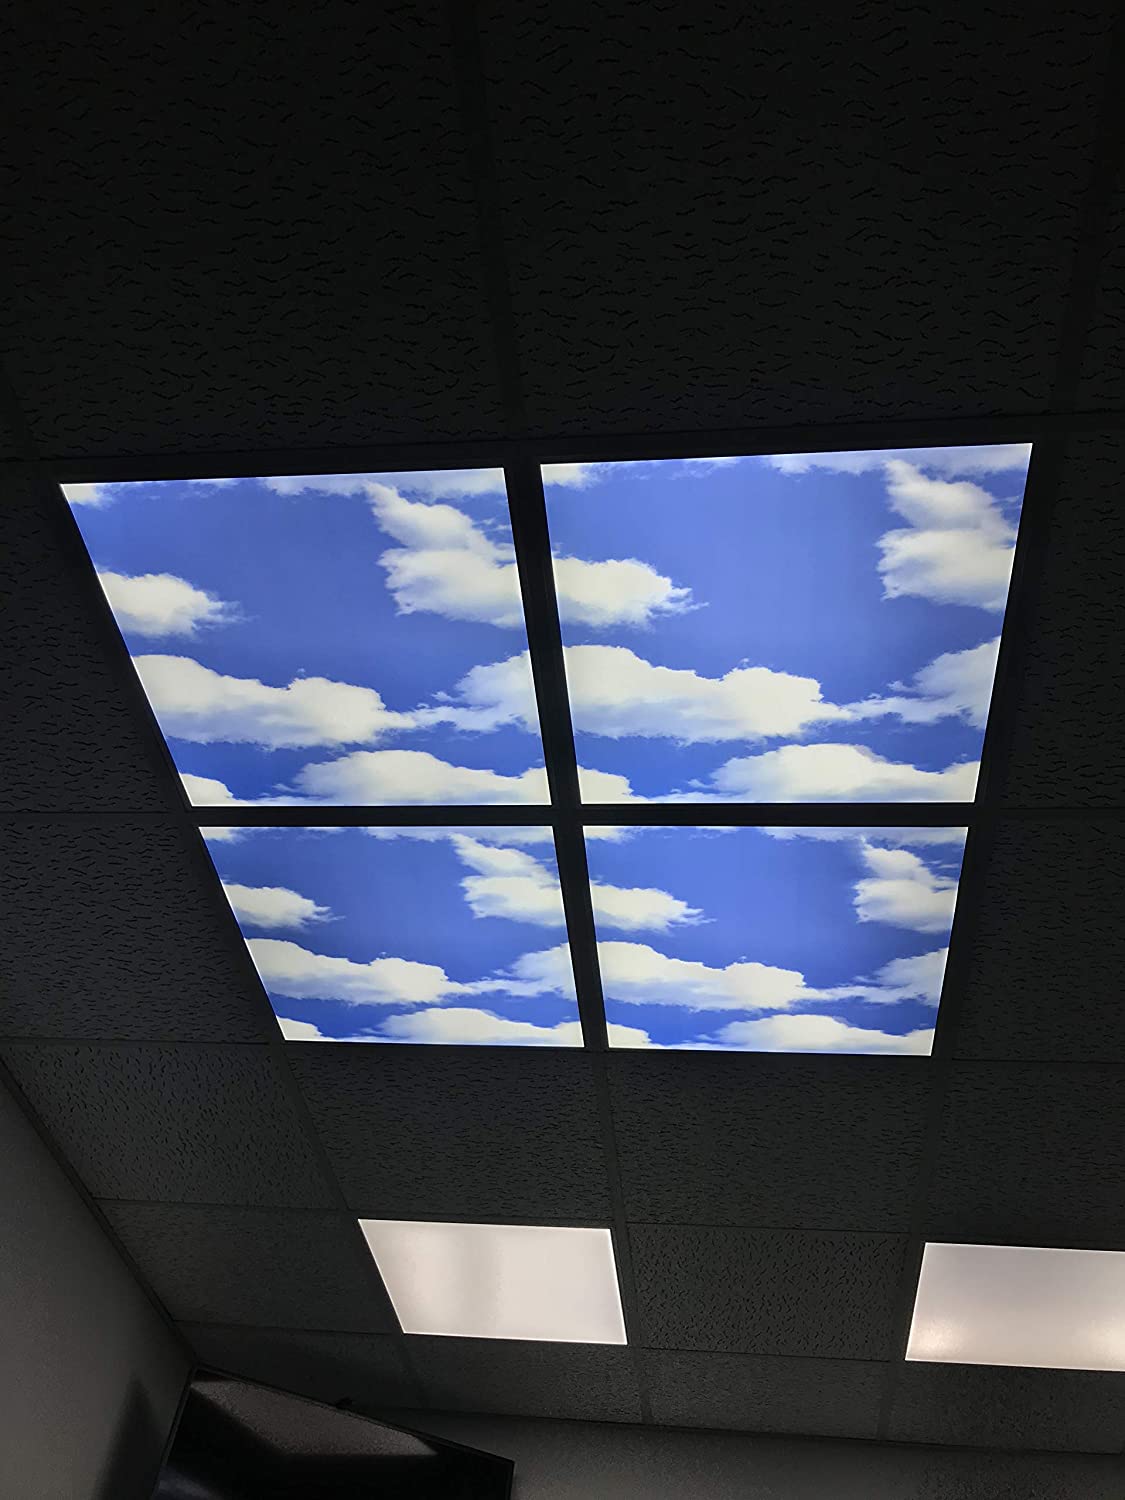 LECOM LED Panel 62x62 3D-SKY blauen Himmels mit weißen Wolken Odenwalddecke